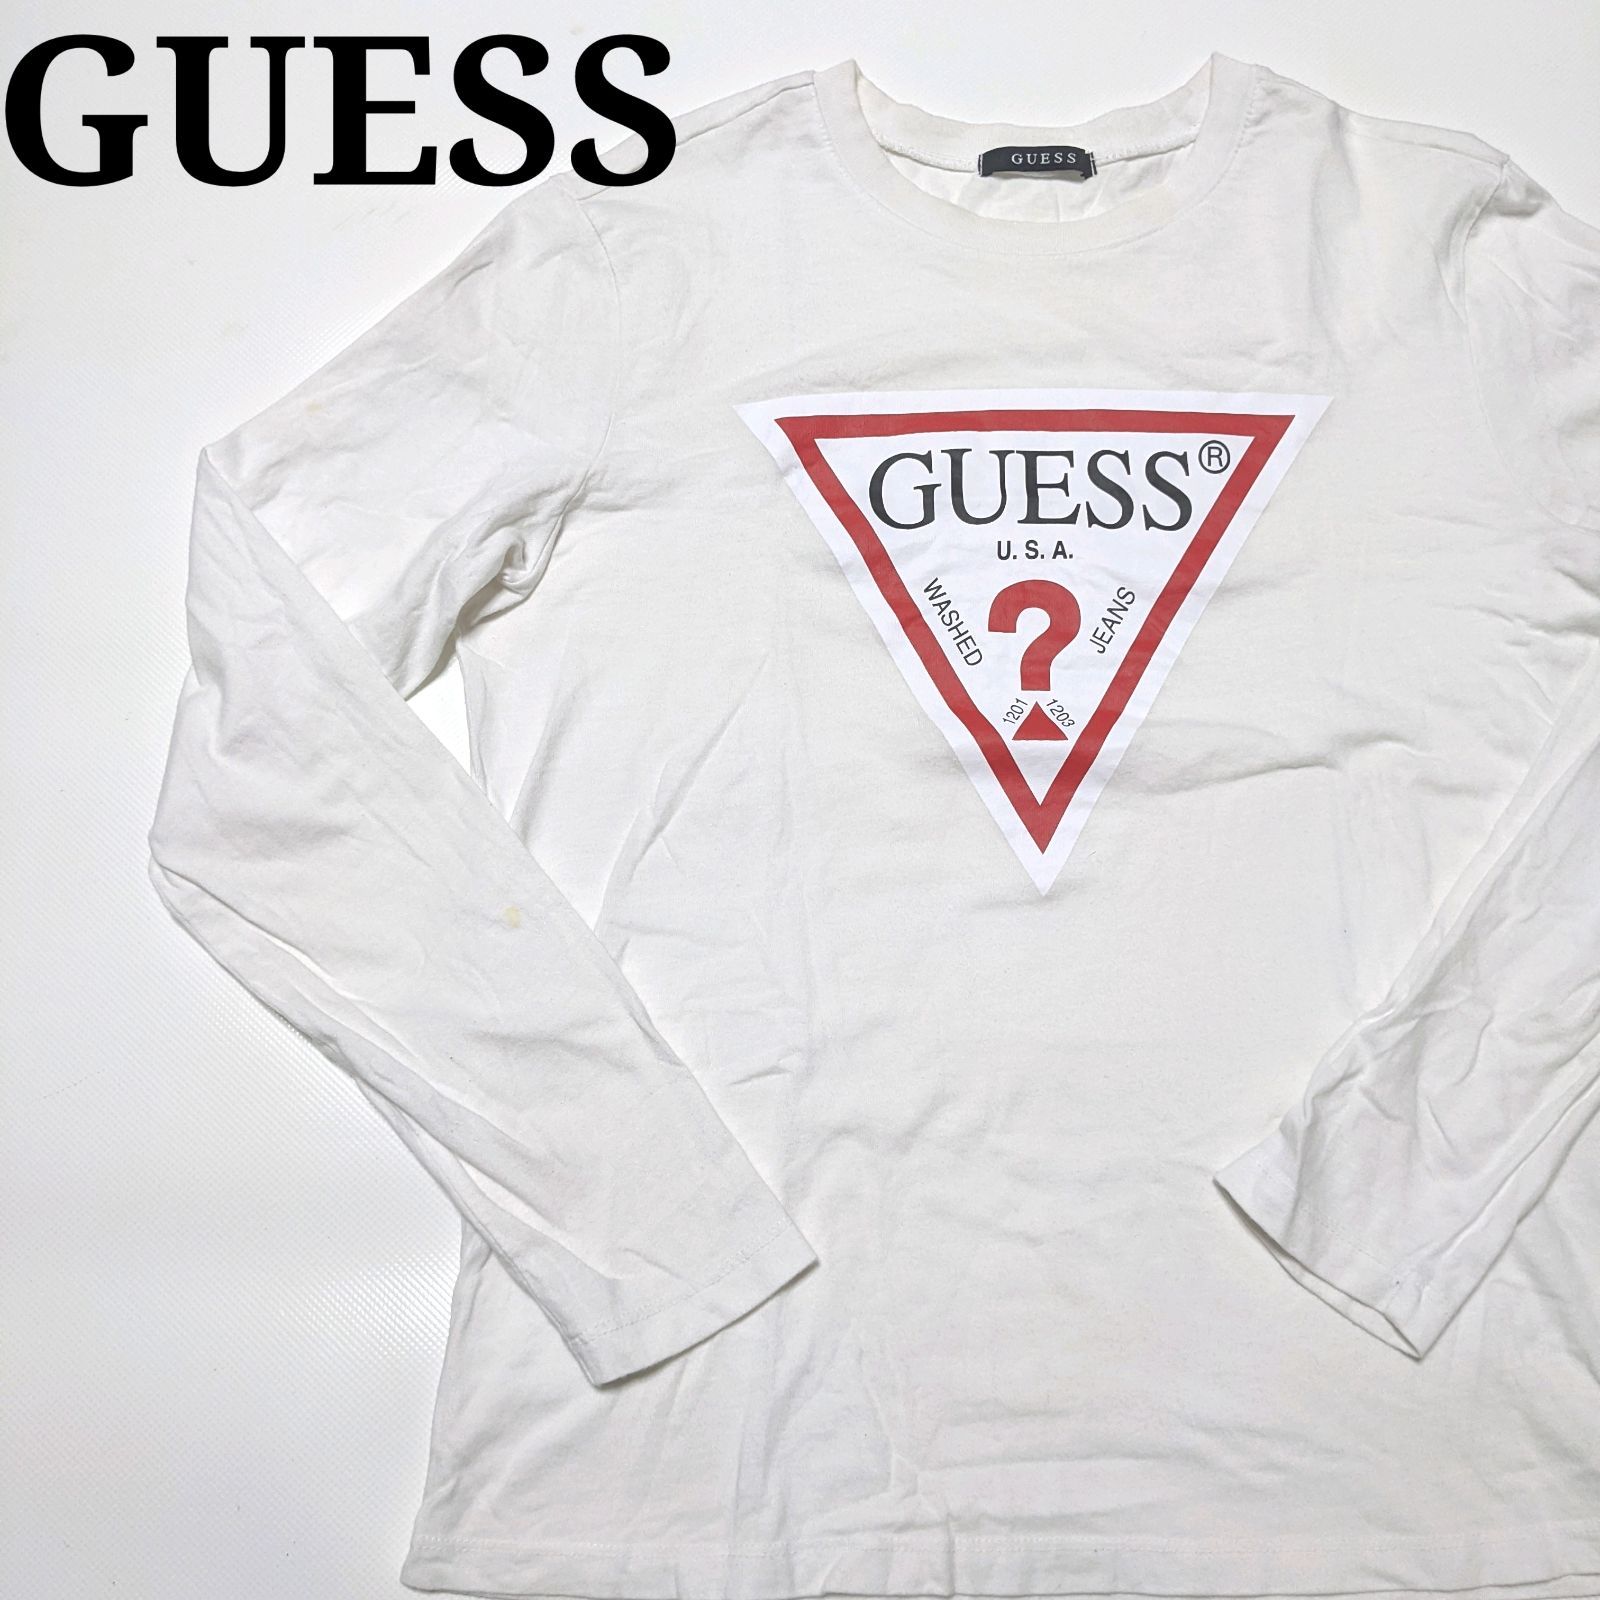 GUESS ロンＴ ホワイト - Tシャツ